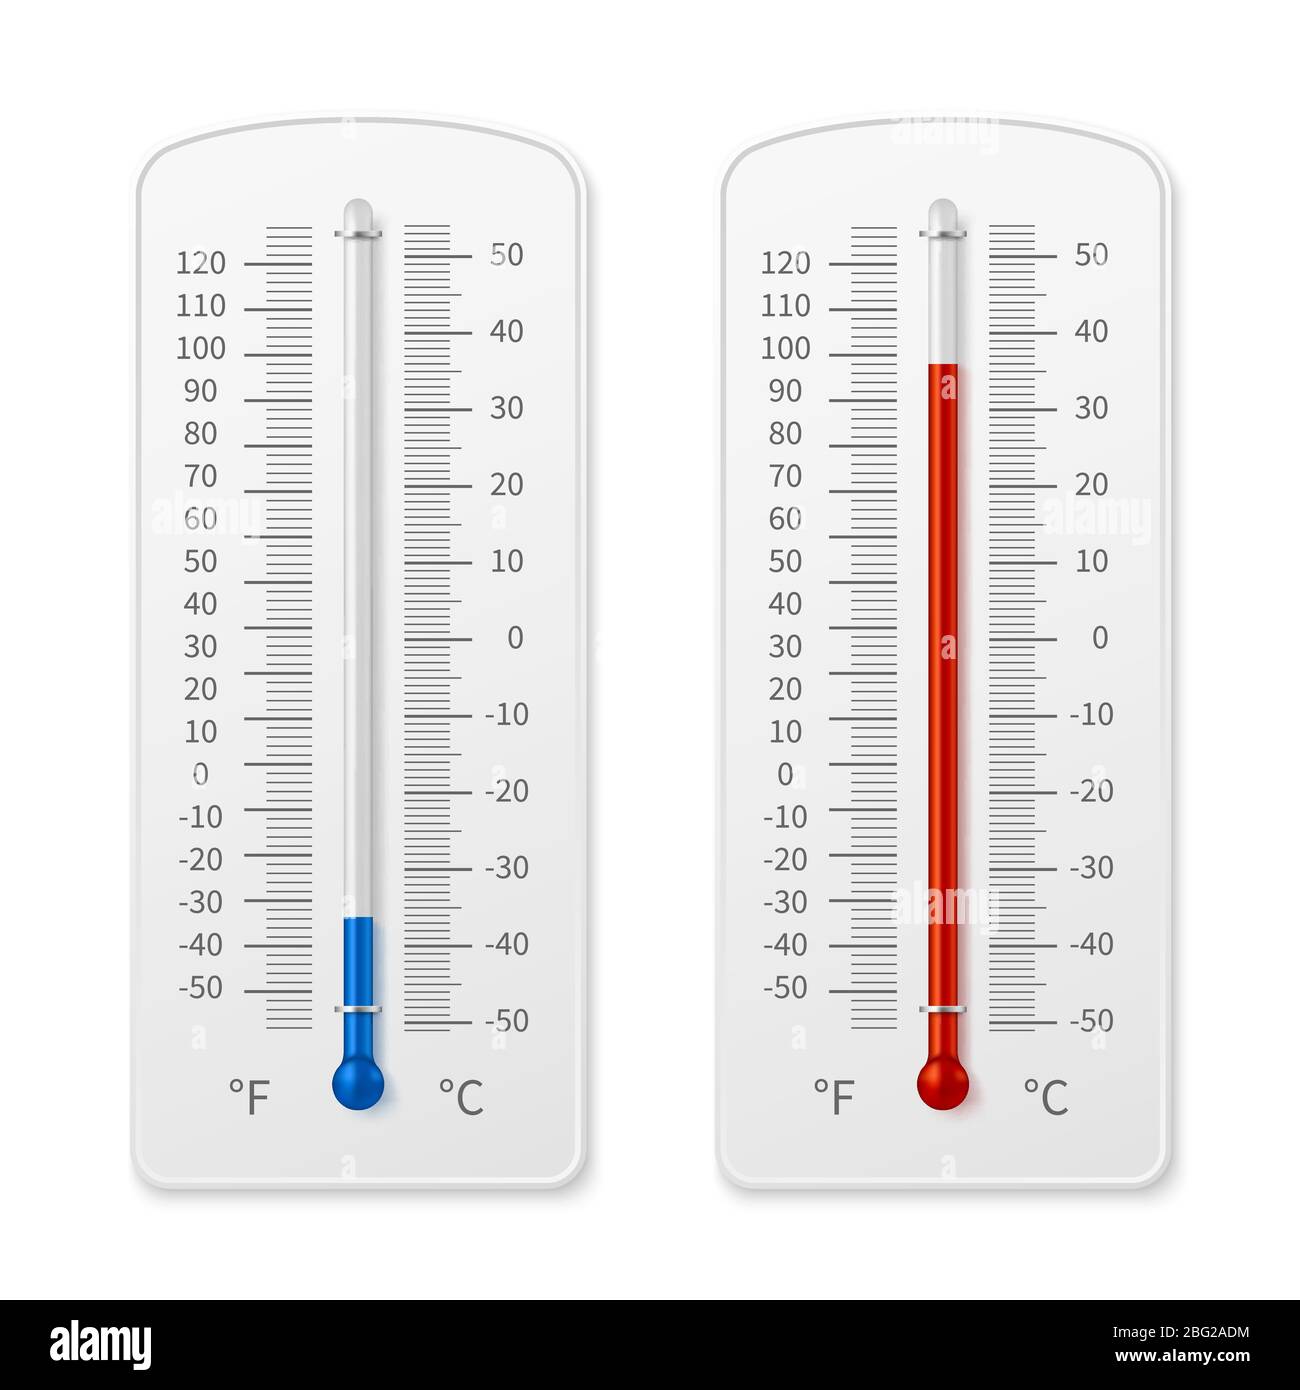 https://c8.alamy.com/compde/2bg2adm/meteorologie-innenthermometer-realistische-vektorgrafik-isoliert-temperaturskala-instrument-thermometer-fur-wetter-2bg2adm.jpg